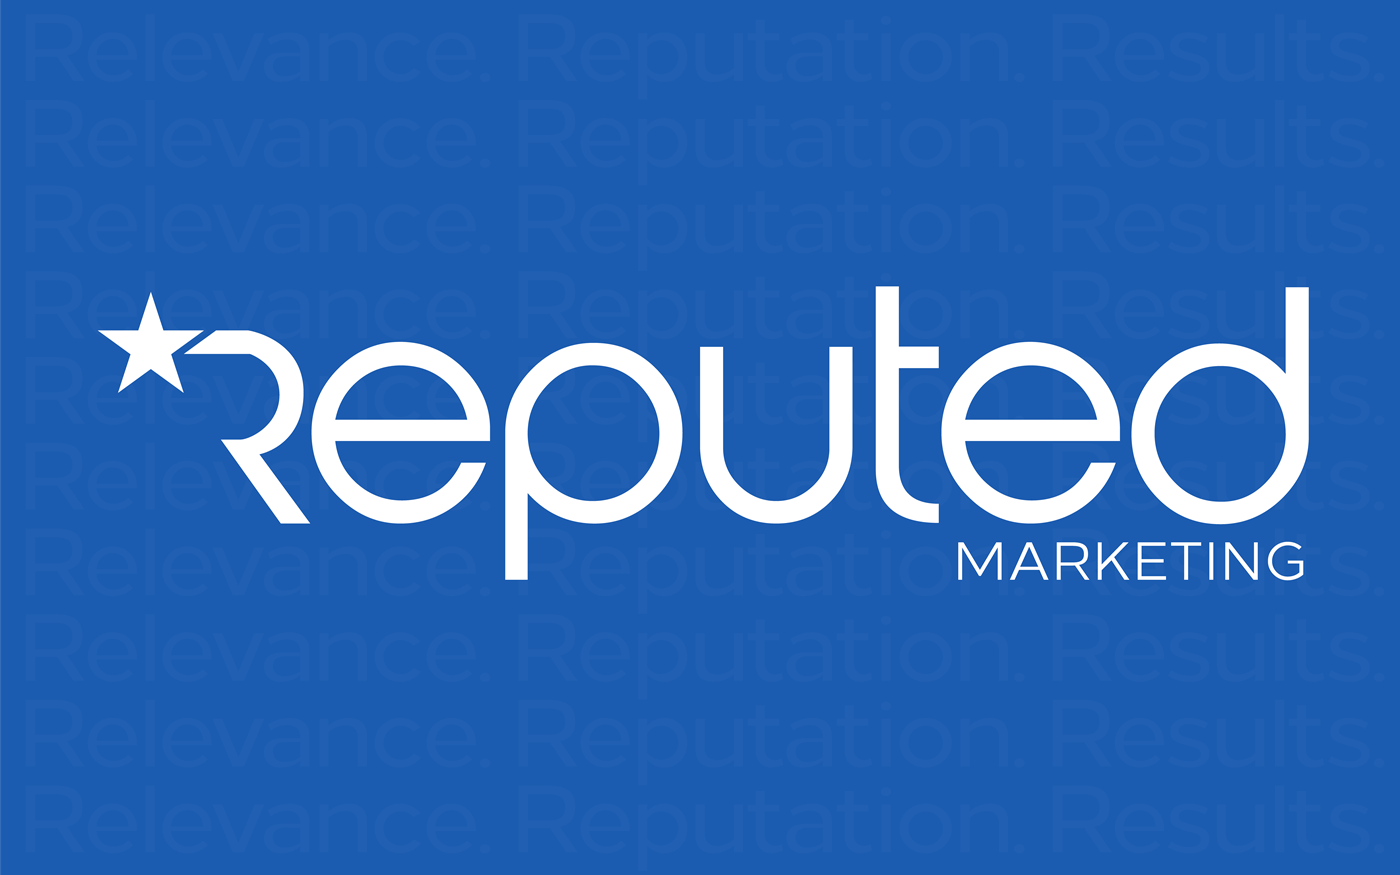 Reputed Marketing logo